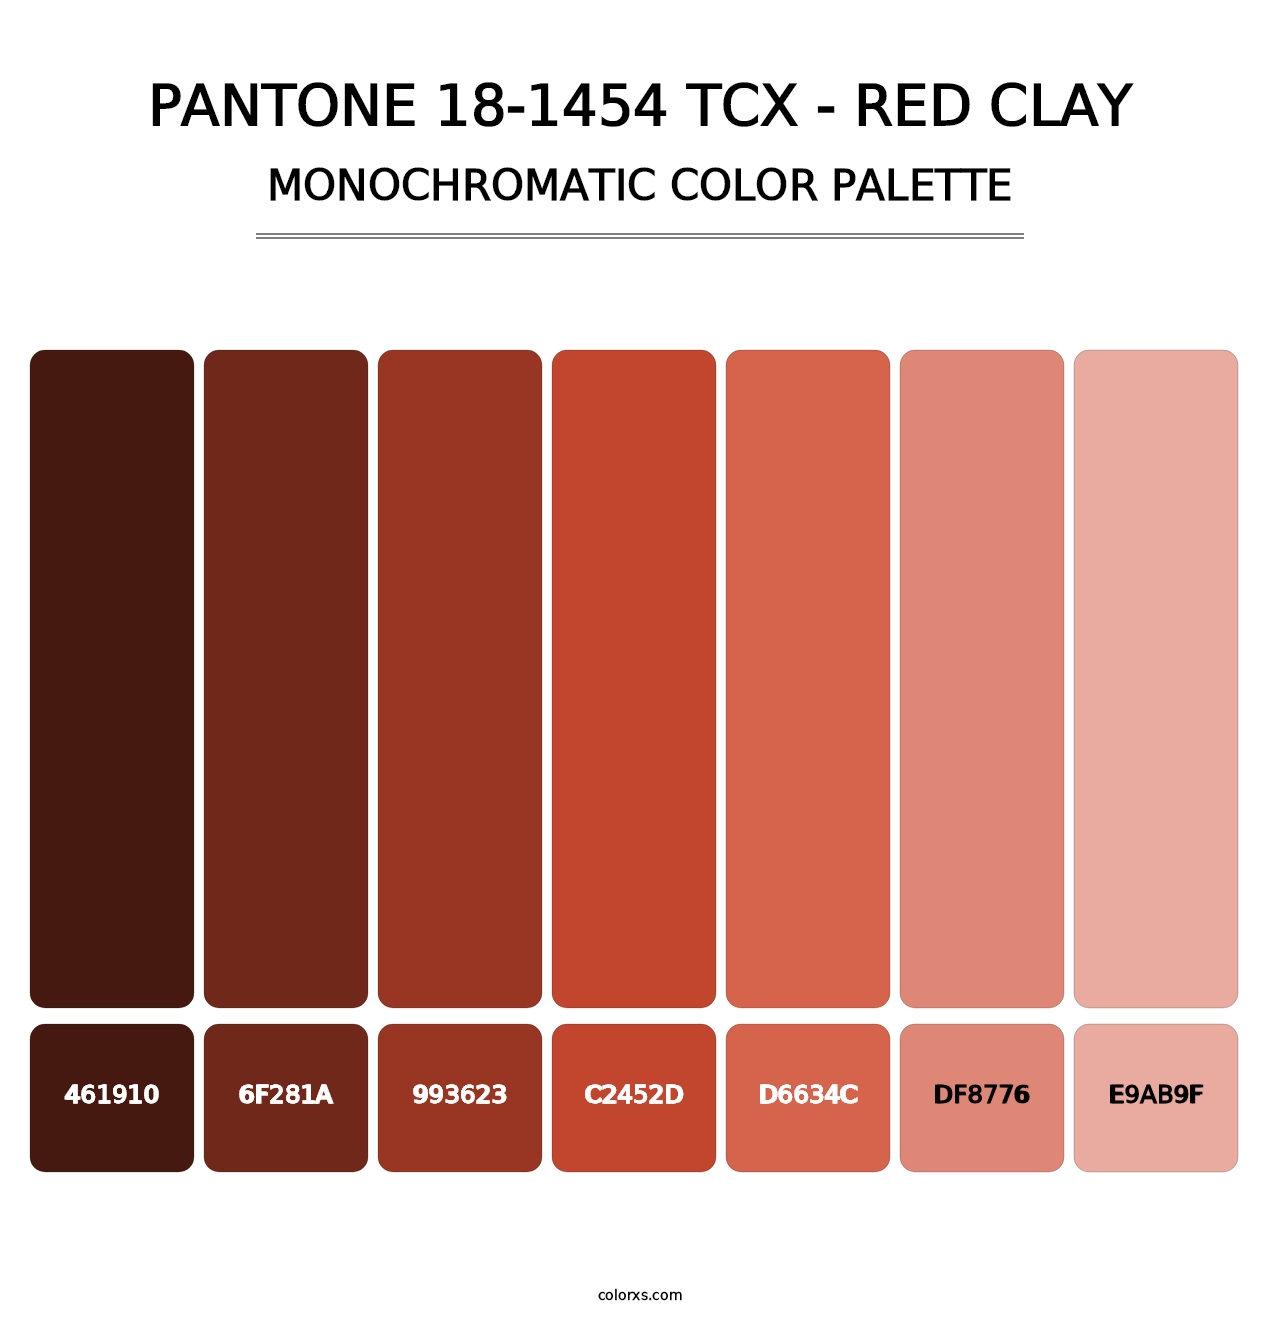 PANTONE 18-1454 TCX - Red Clay - Monochromatic Color Palette